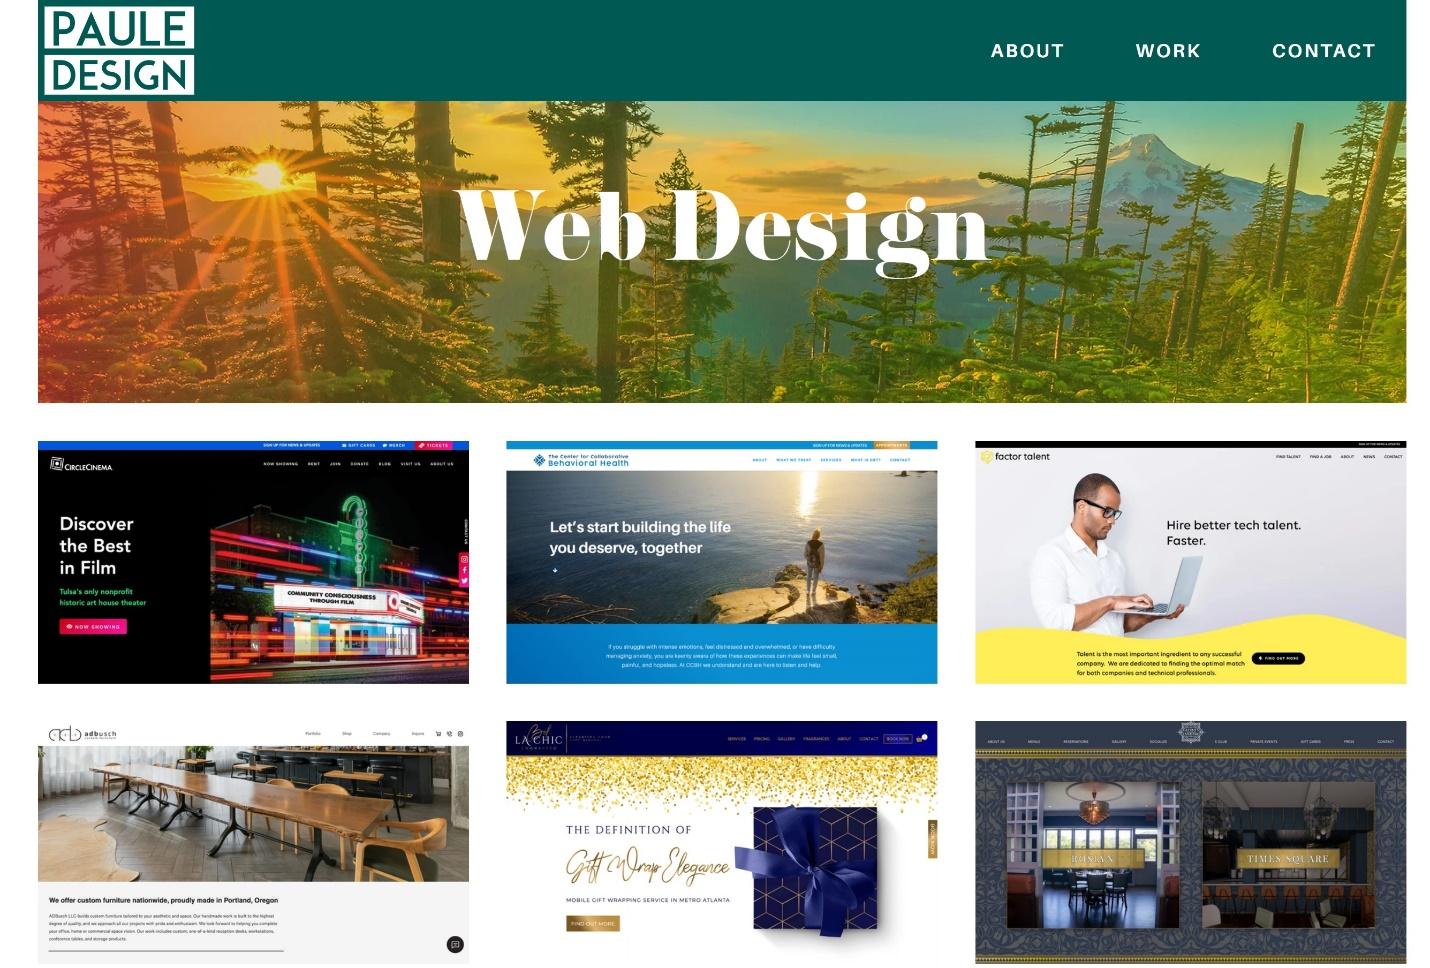 Paule Design web design portfolio Work Web Design page